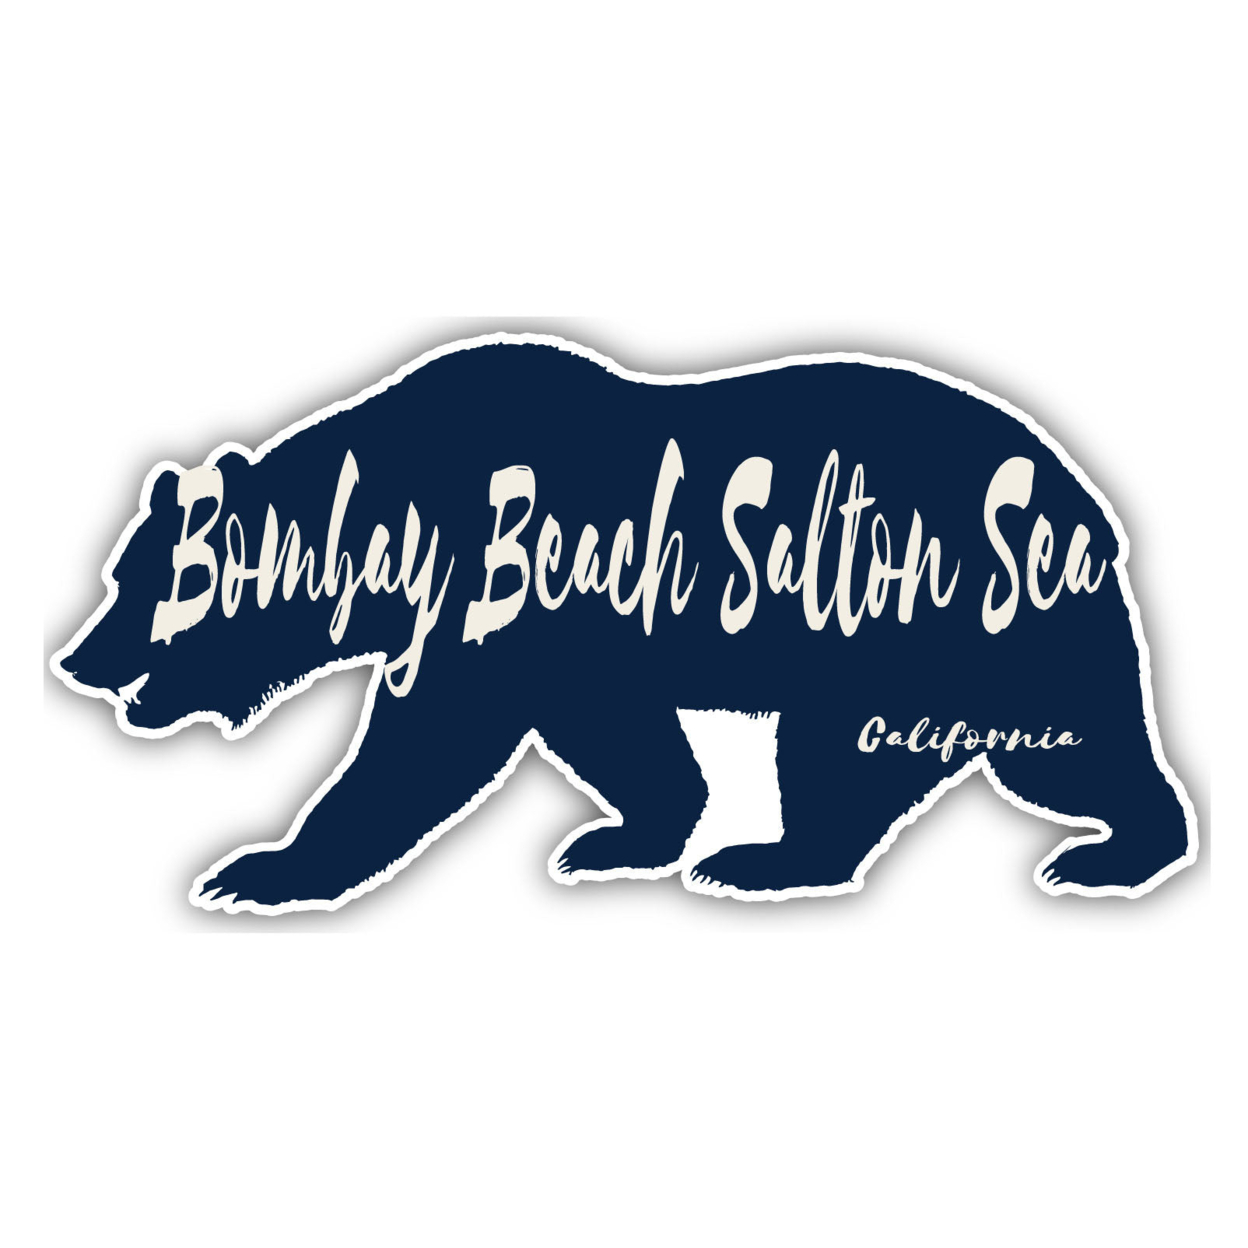 Bombay Beach Salton Sea California Souvenir Decorative Stickers (Choose Theme And Size) - 4-Pack, 10-Inch, Bear